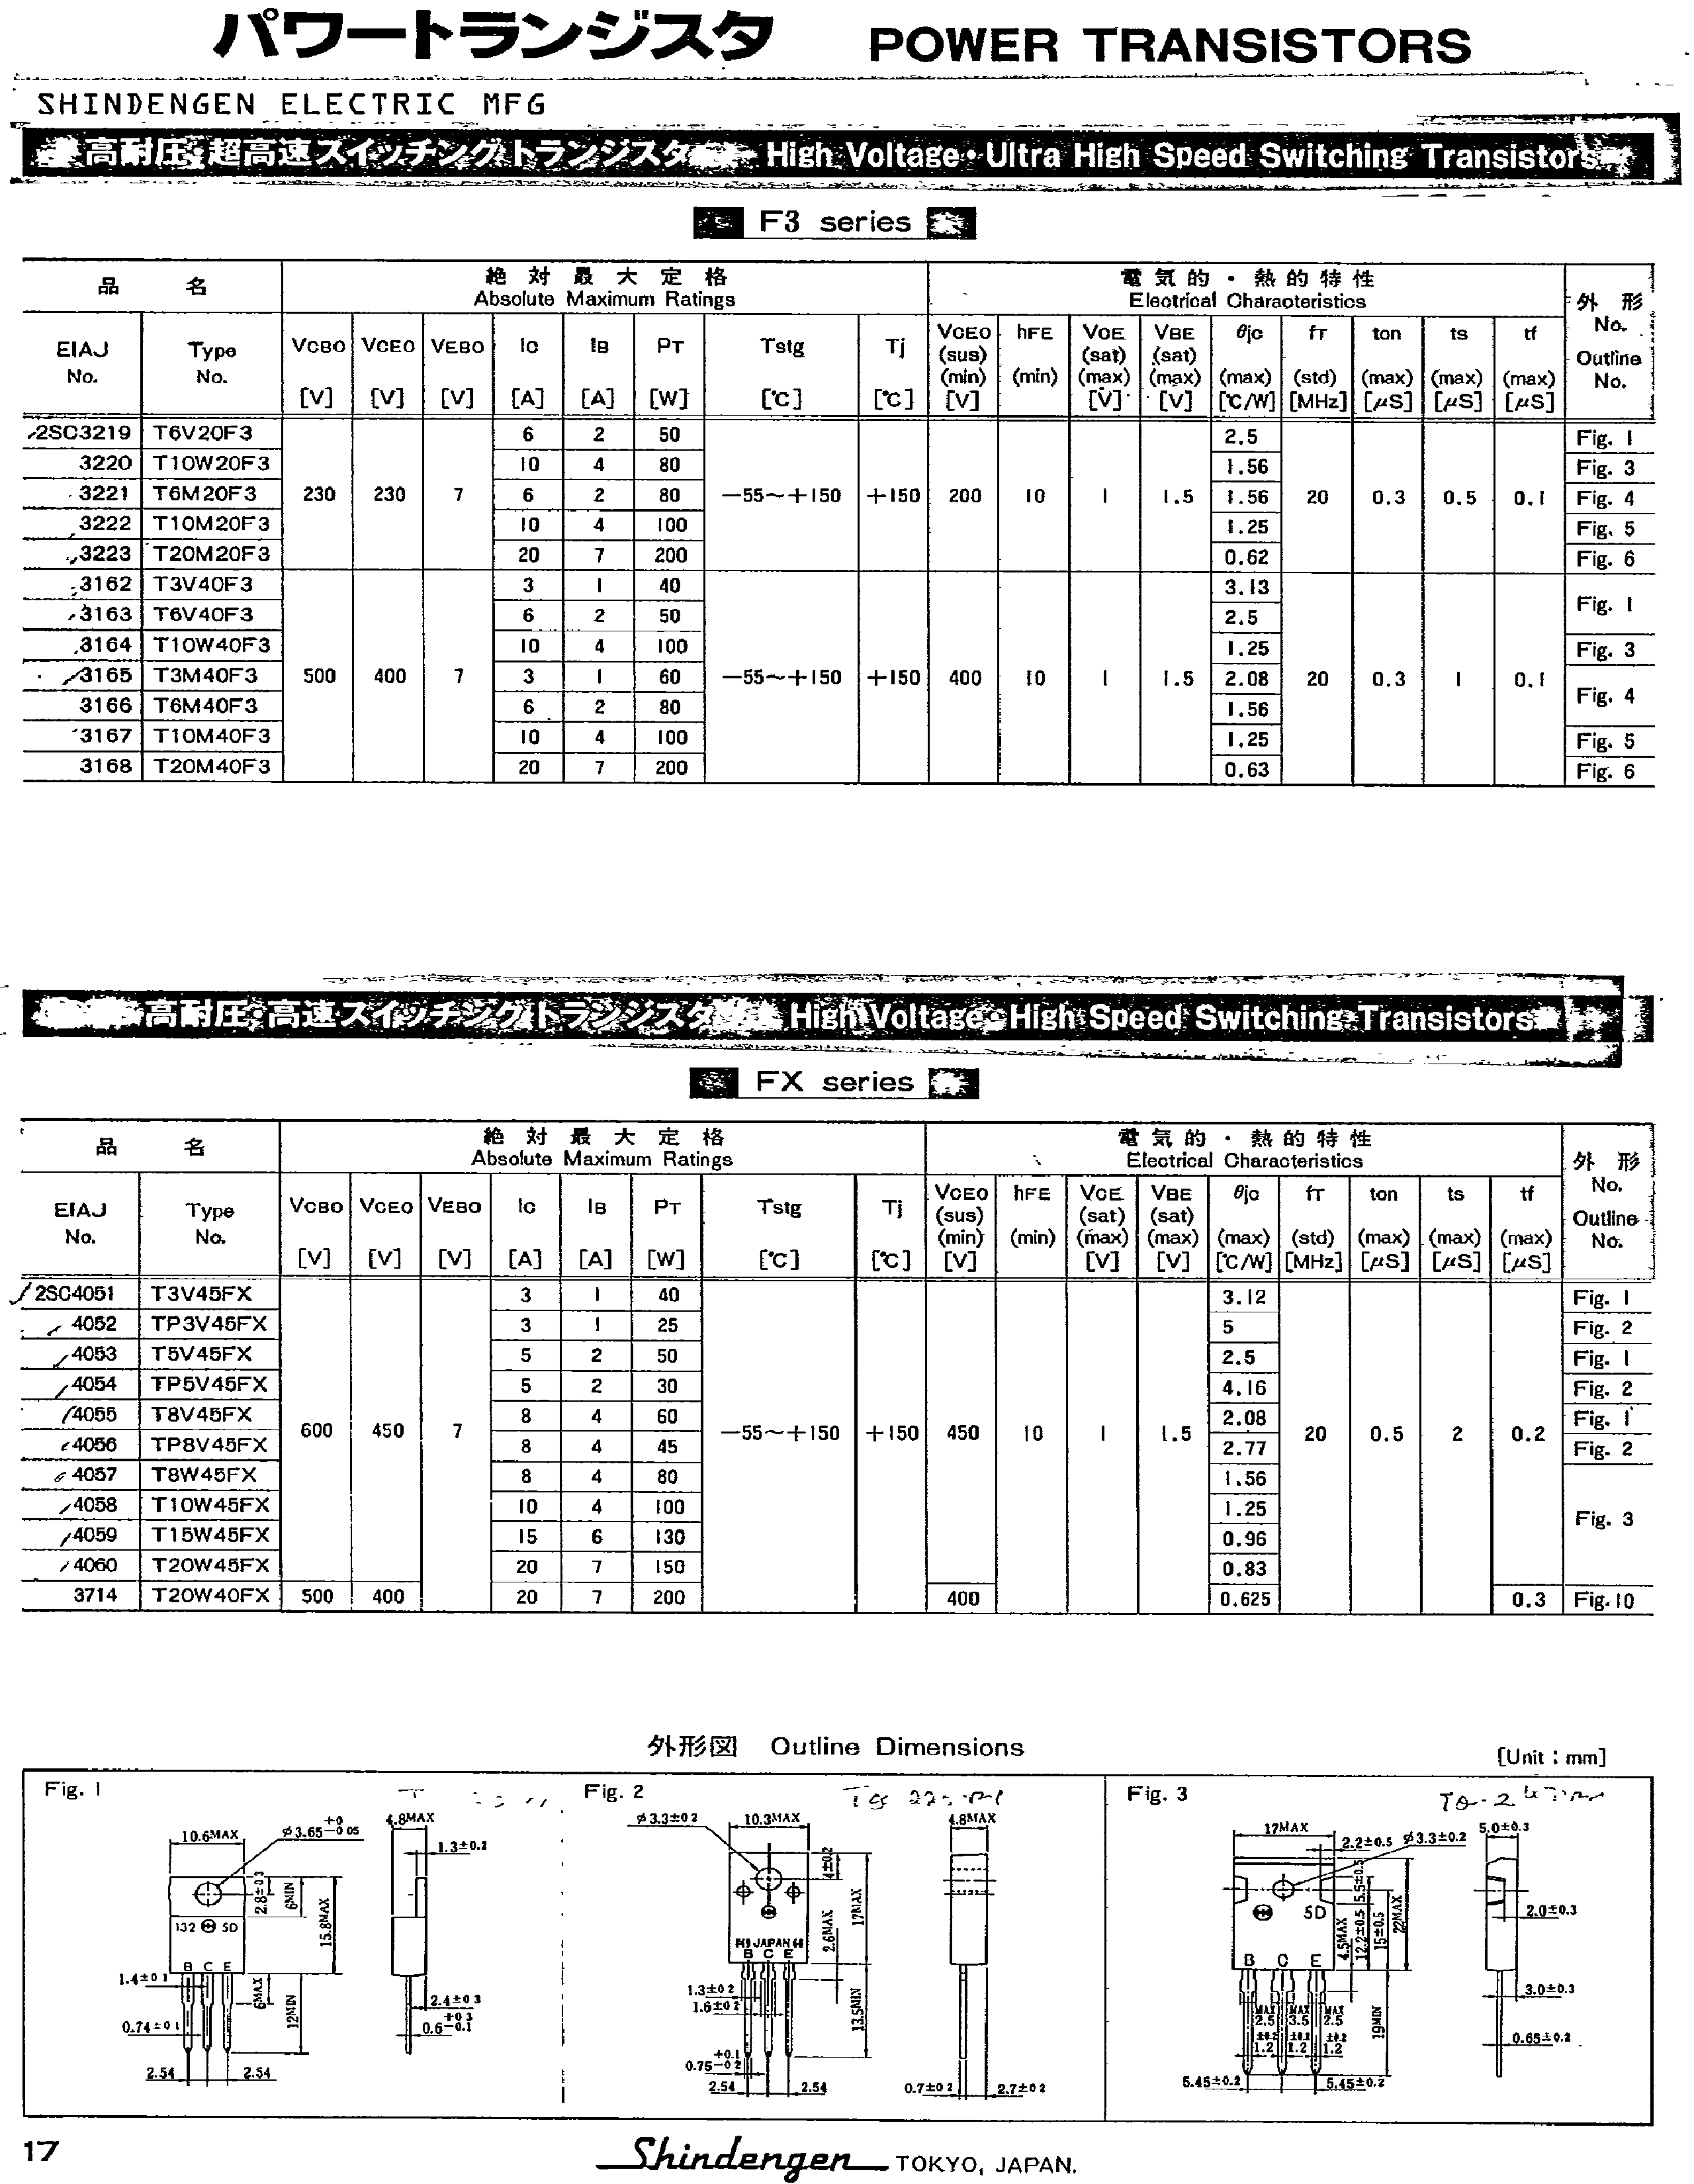 2SC3222 Shindengen Electric Mfg.Co.Ltd